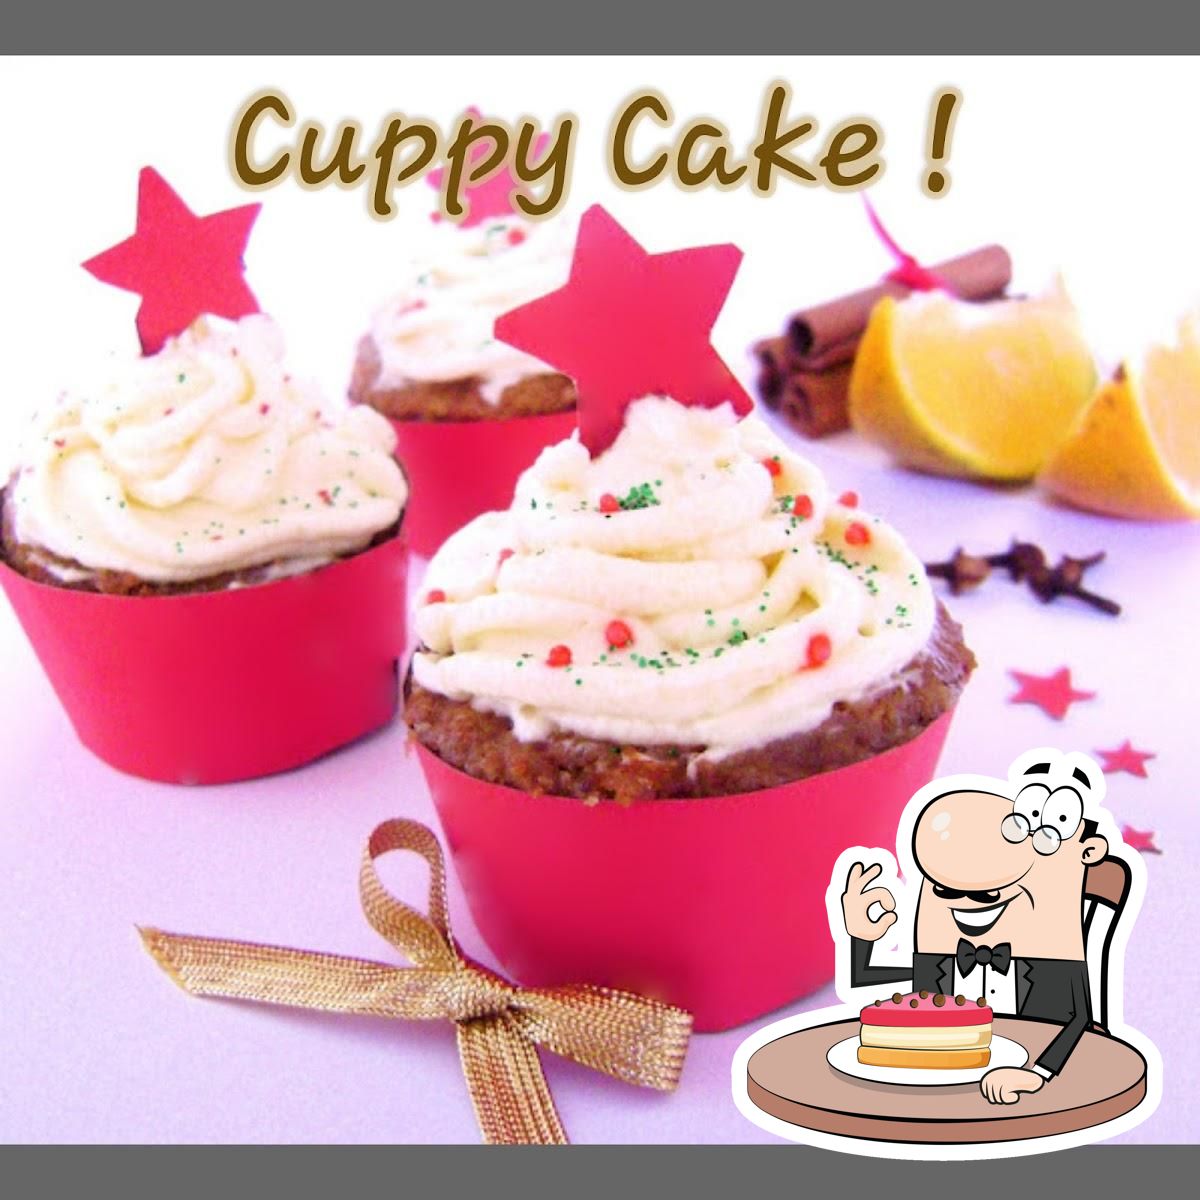 Cuppy-Cake by ariane golla on Prezi Next